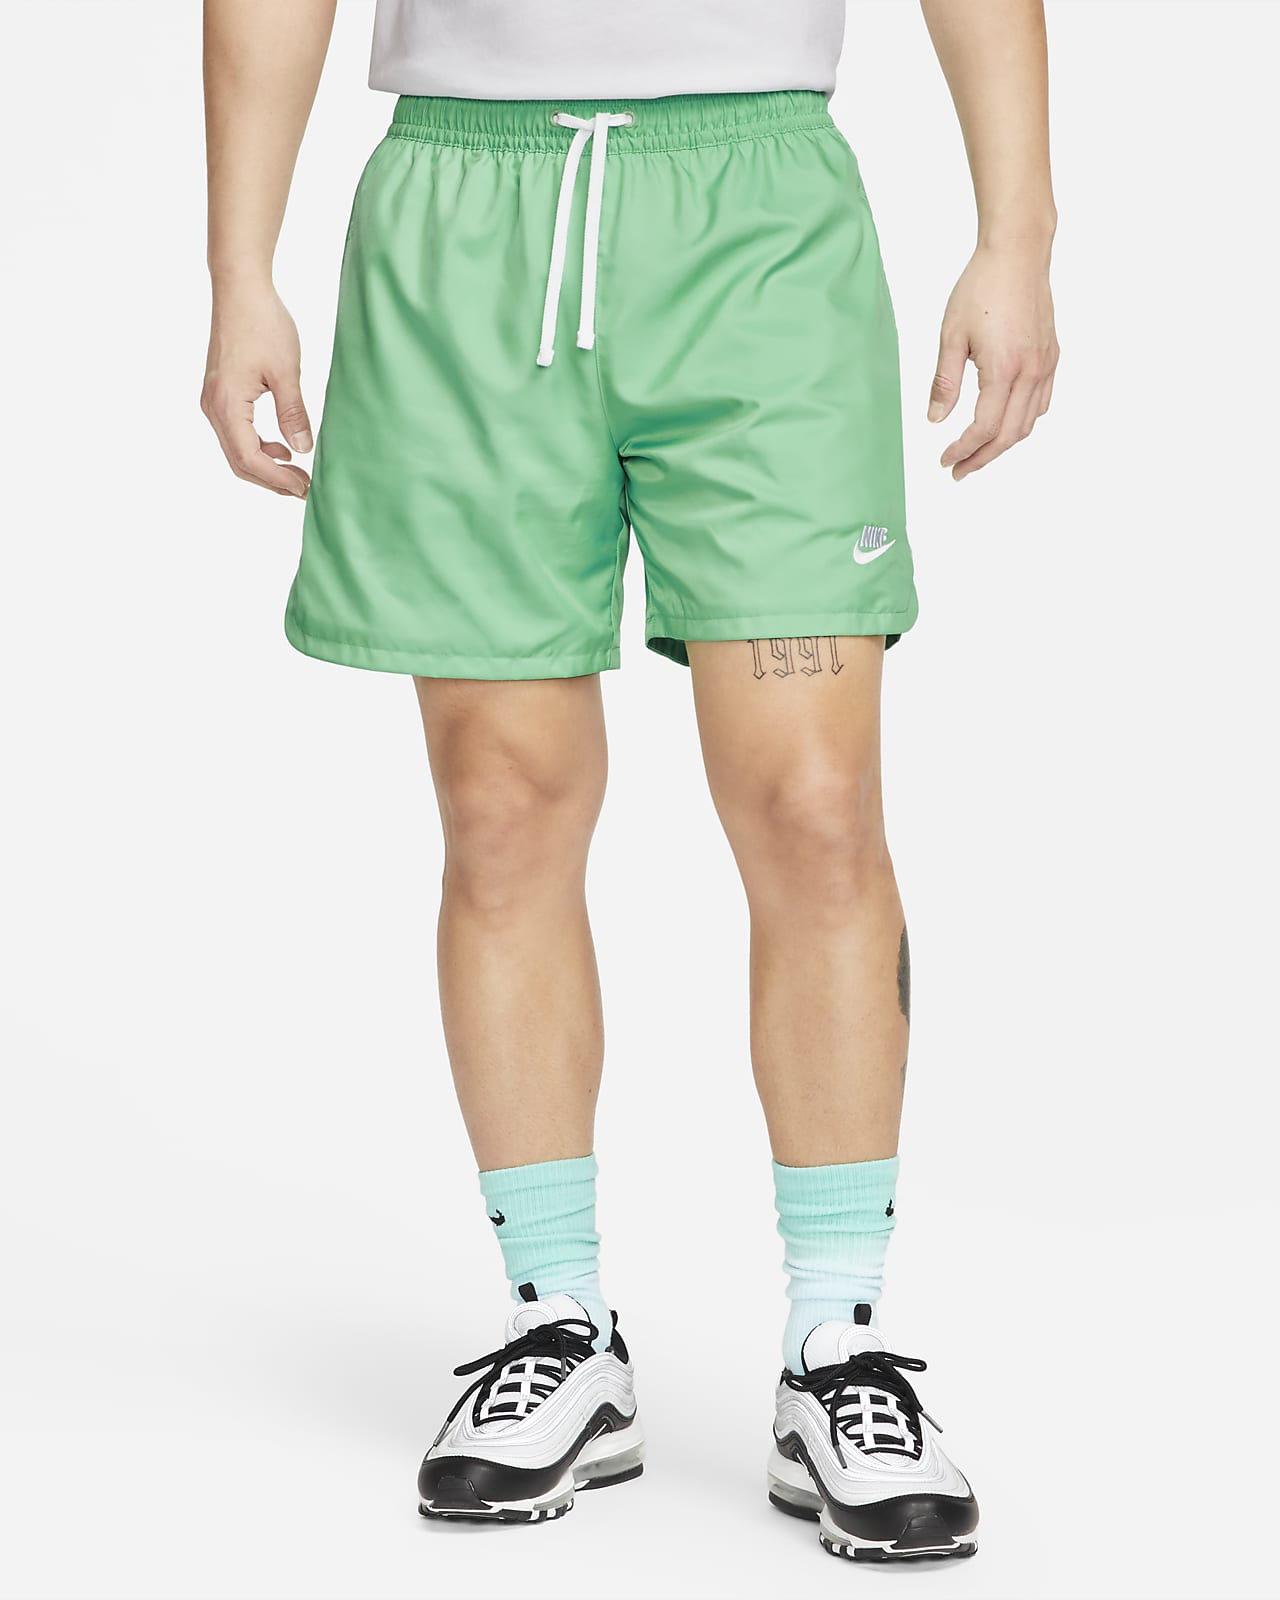 Nike, Sportswear Essentials Men's Woven Flow Shorts, Woven Shorts